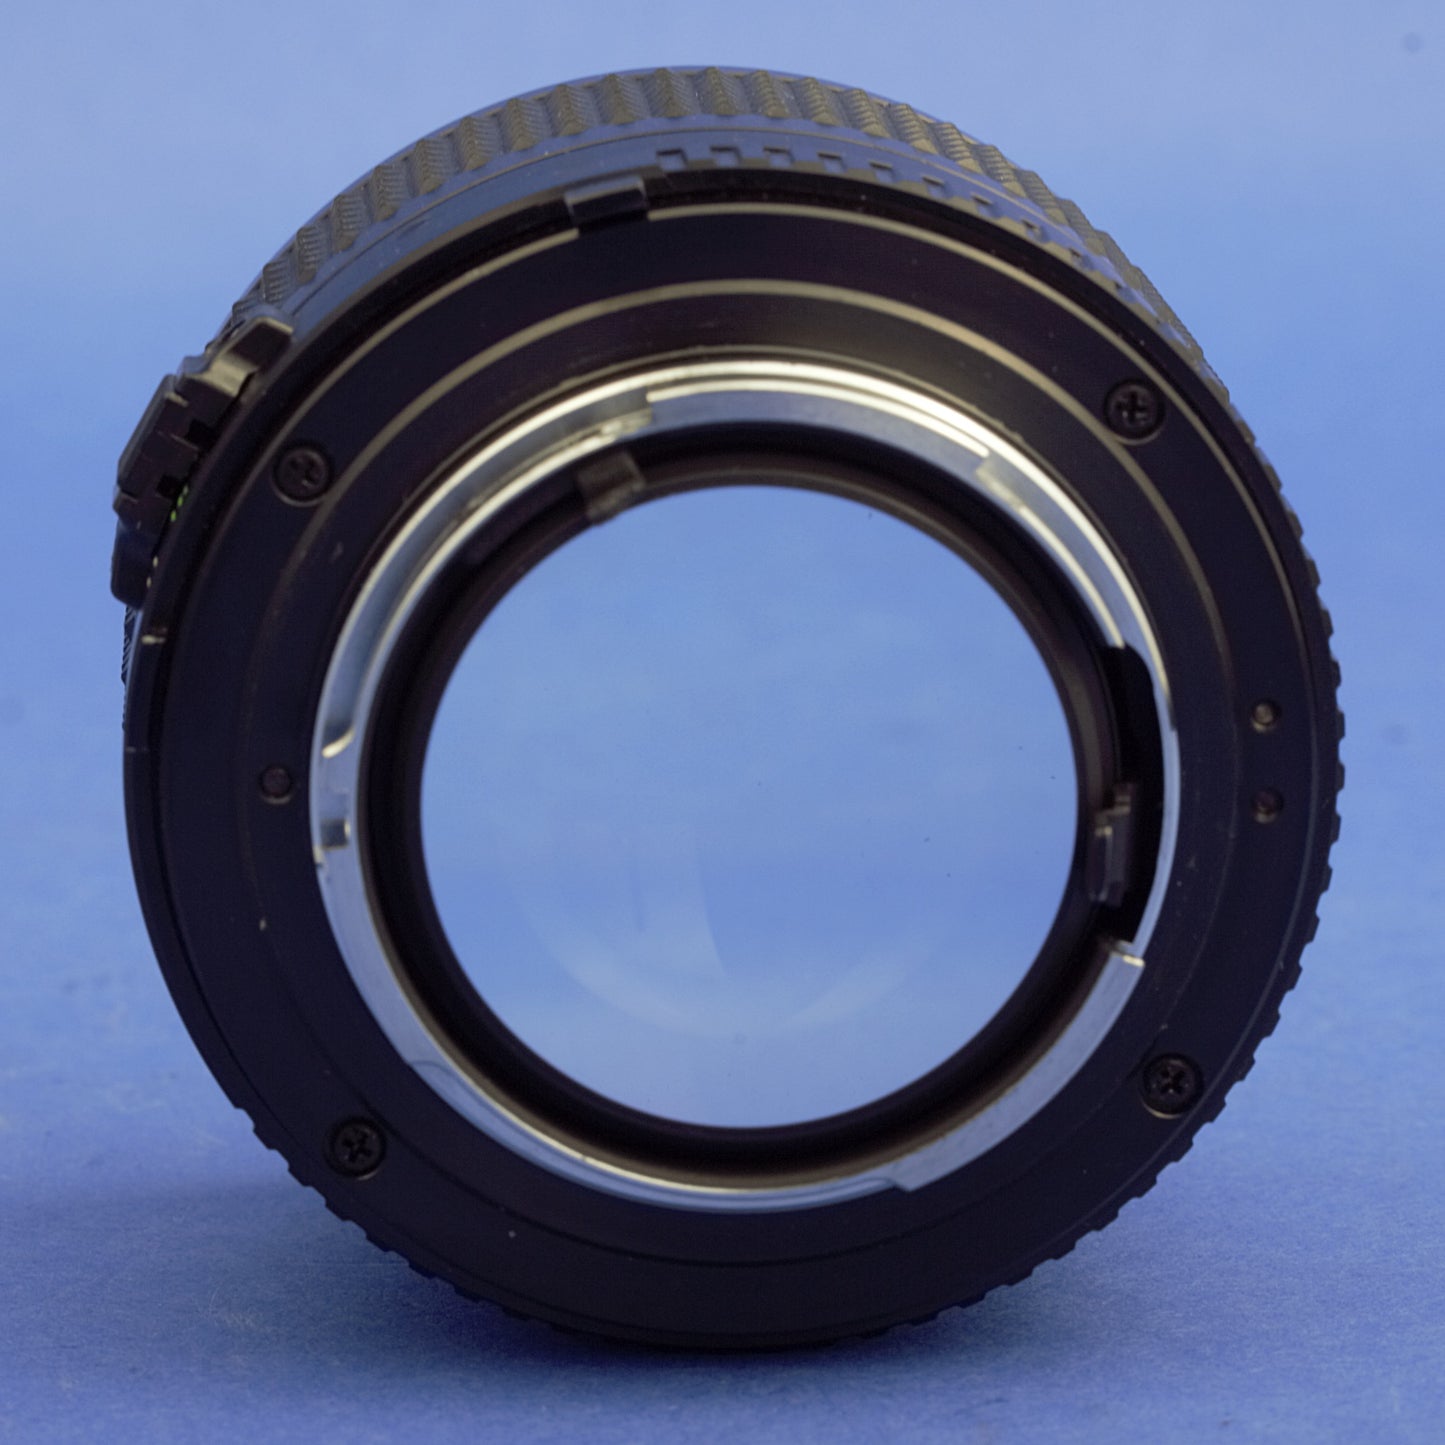 Minolta MD 50mm 1.2 Lens Near Mint Condition